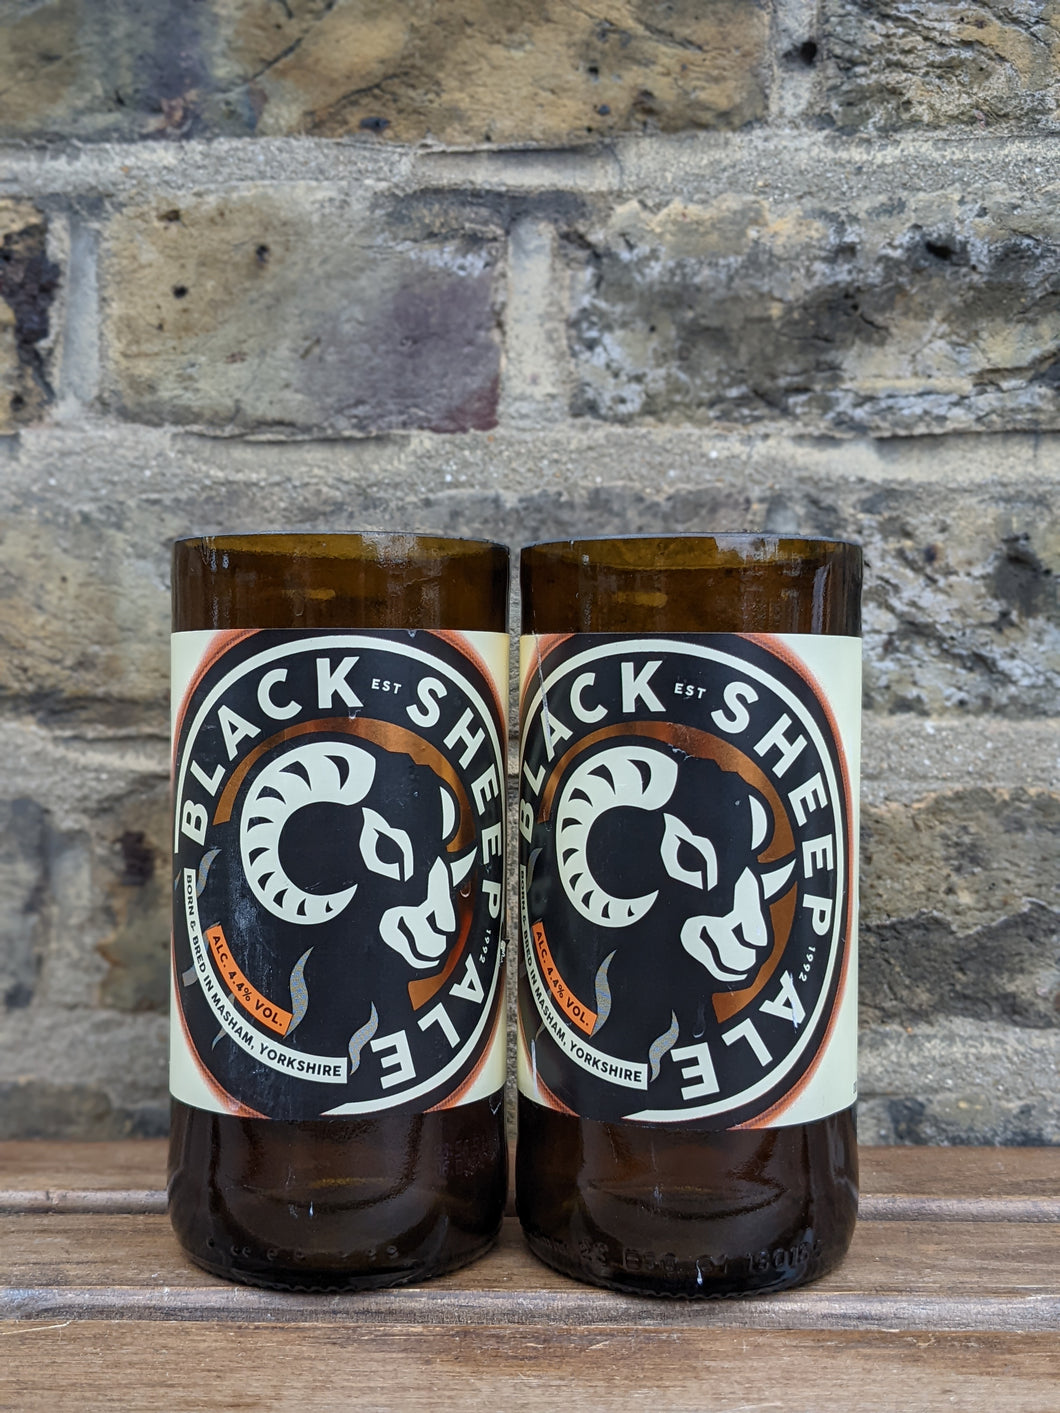 Black Sheep beer bottle glasses